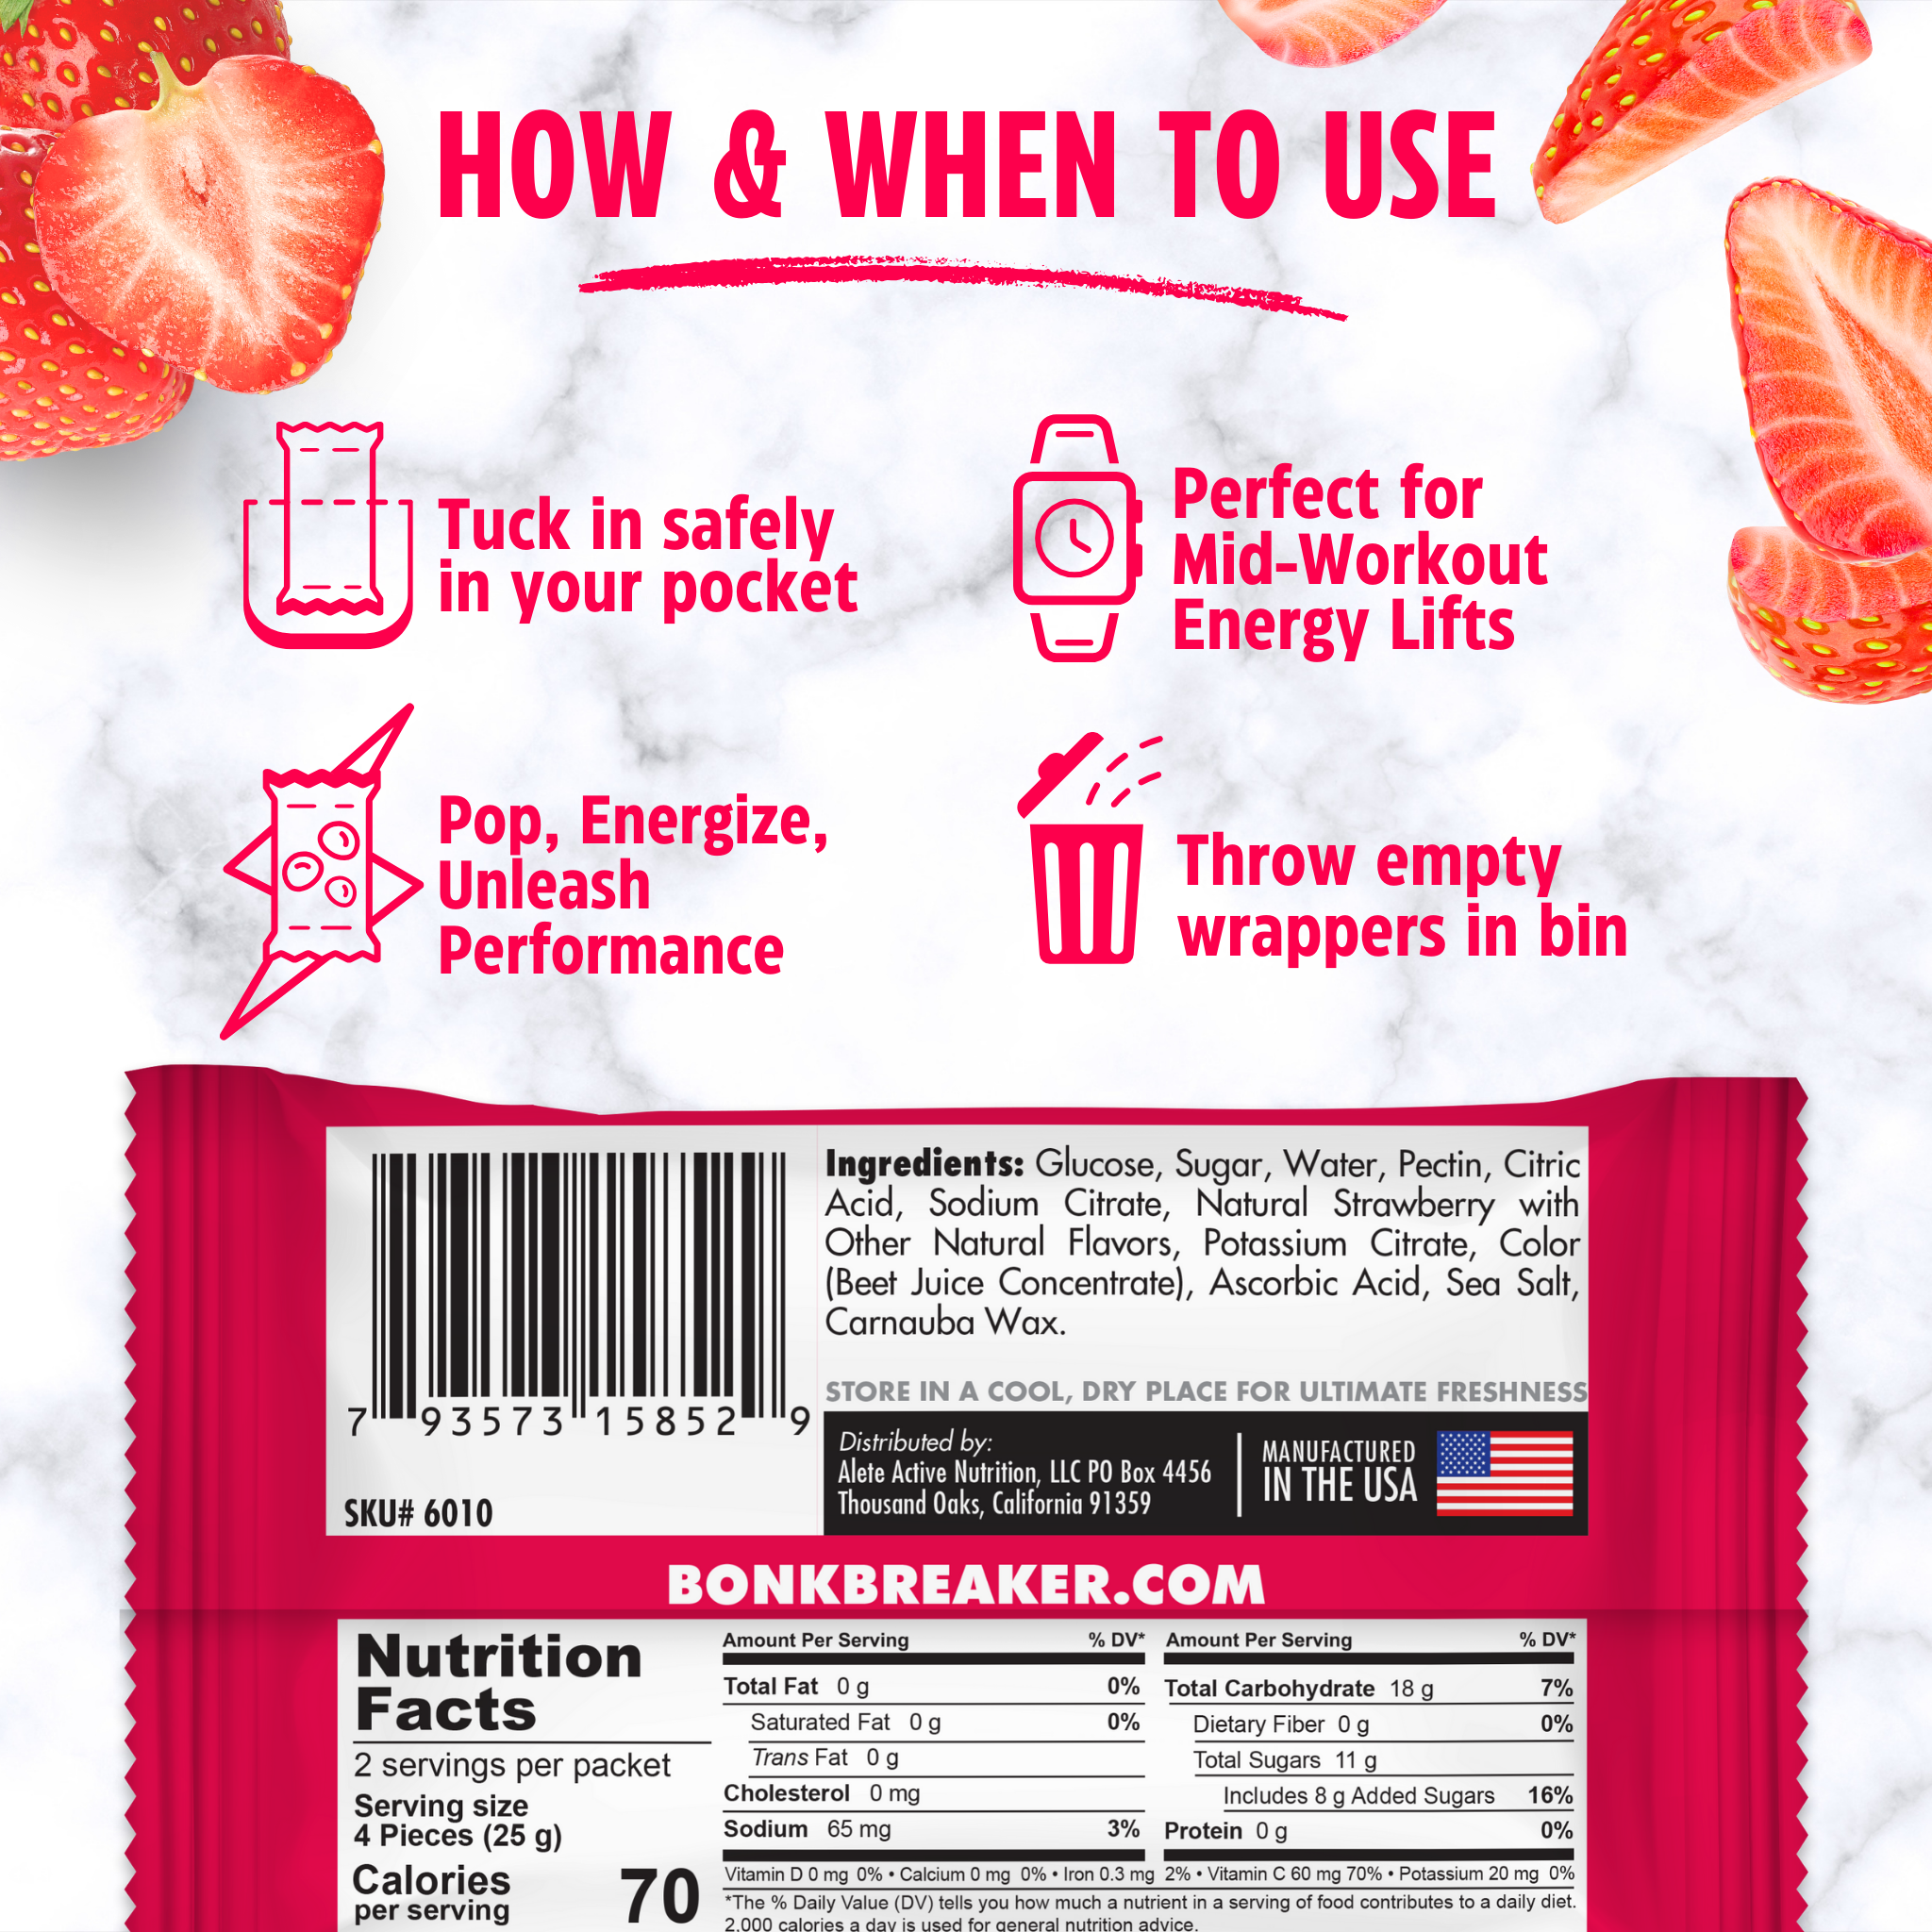 Bonk Breaker Energy Chew Strawberry (10x50g)